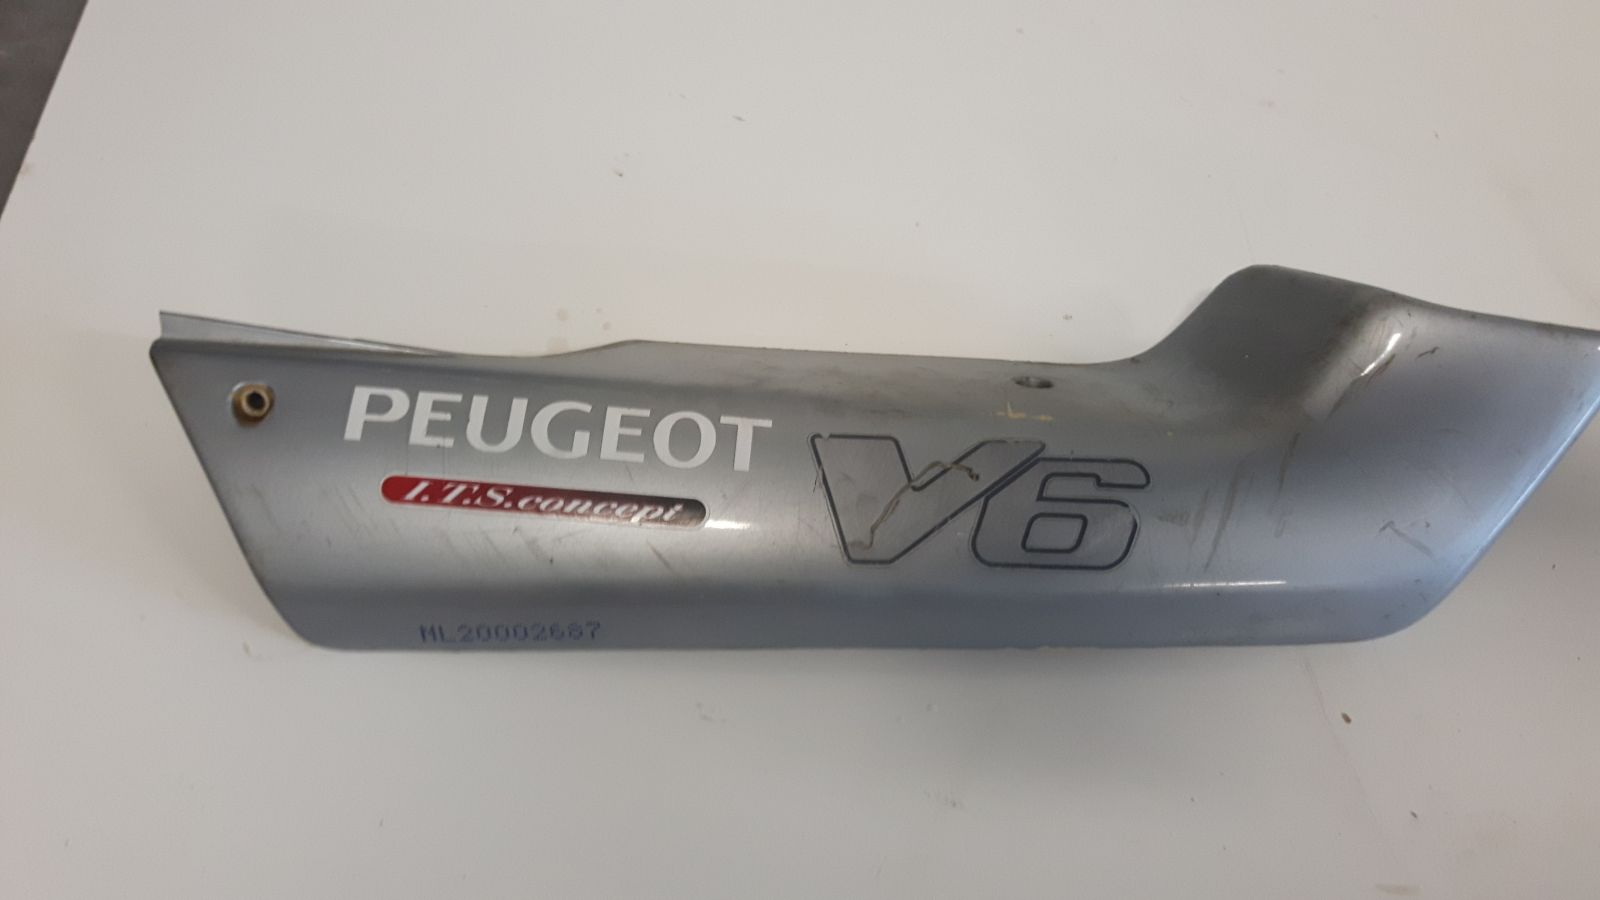 Peugeot Fox side cover